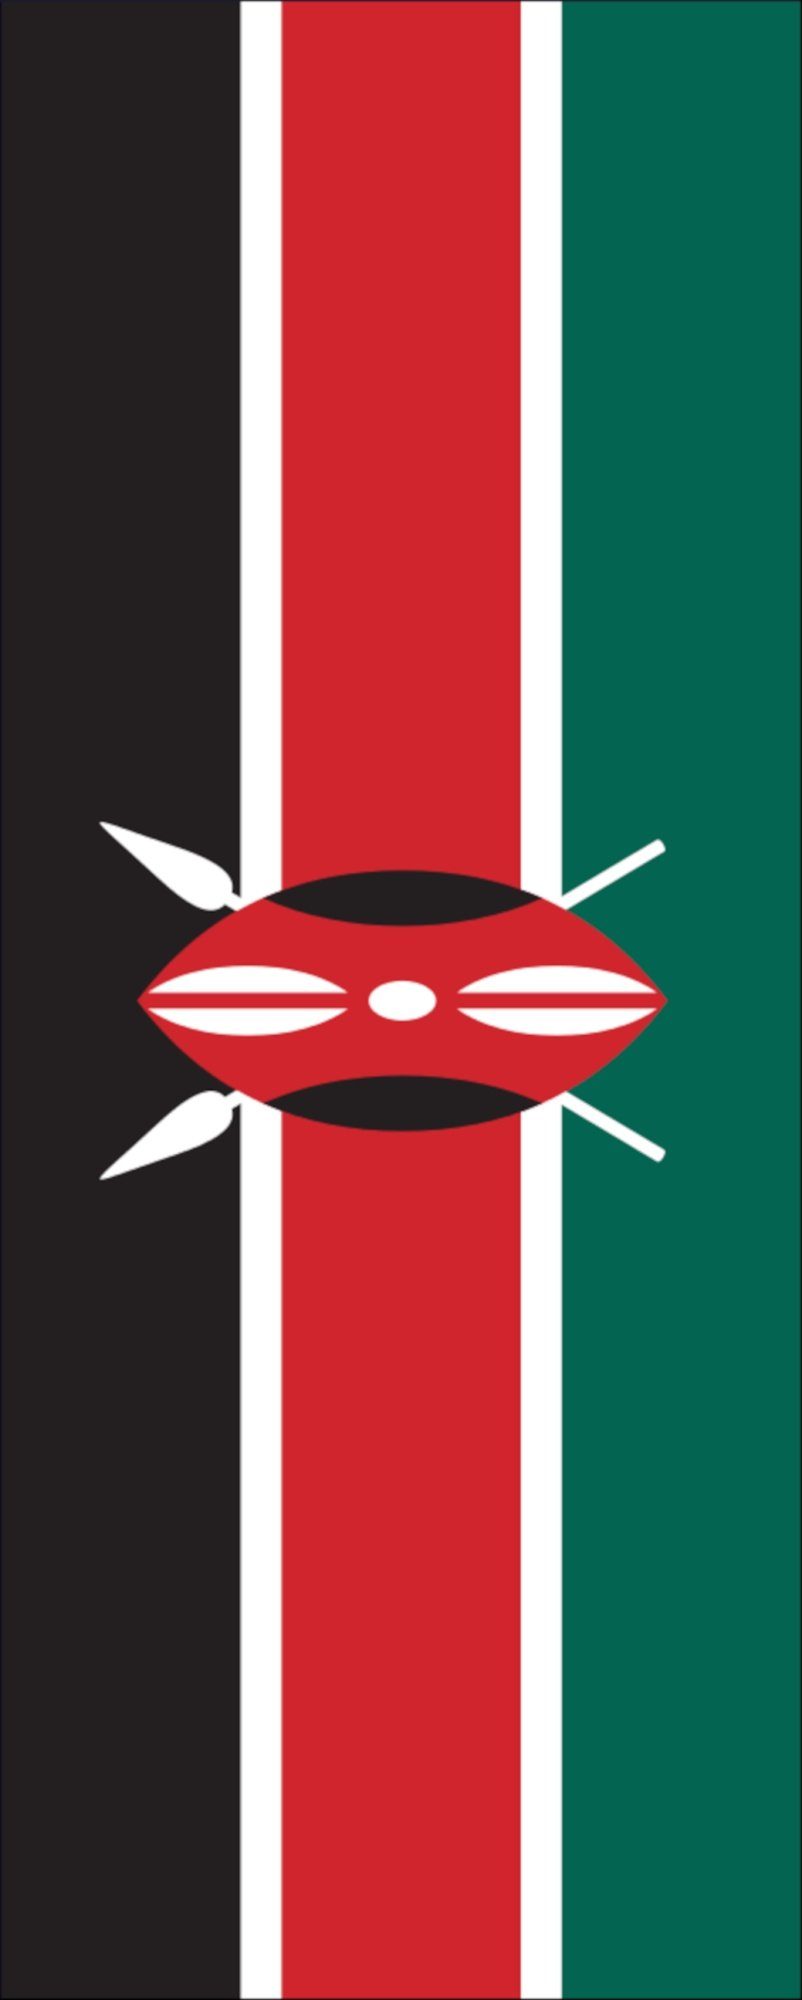 flaggenmeer Kenia Hochformat 110 Flagge Flagge g/m²